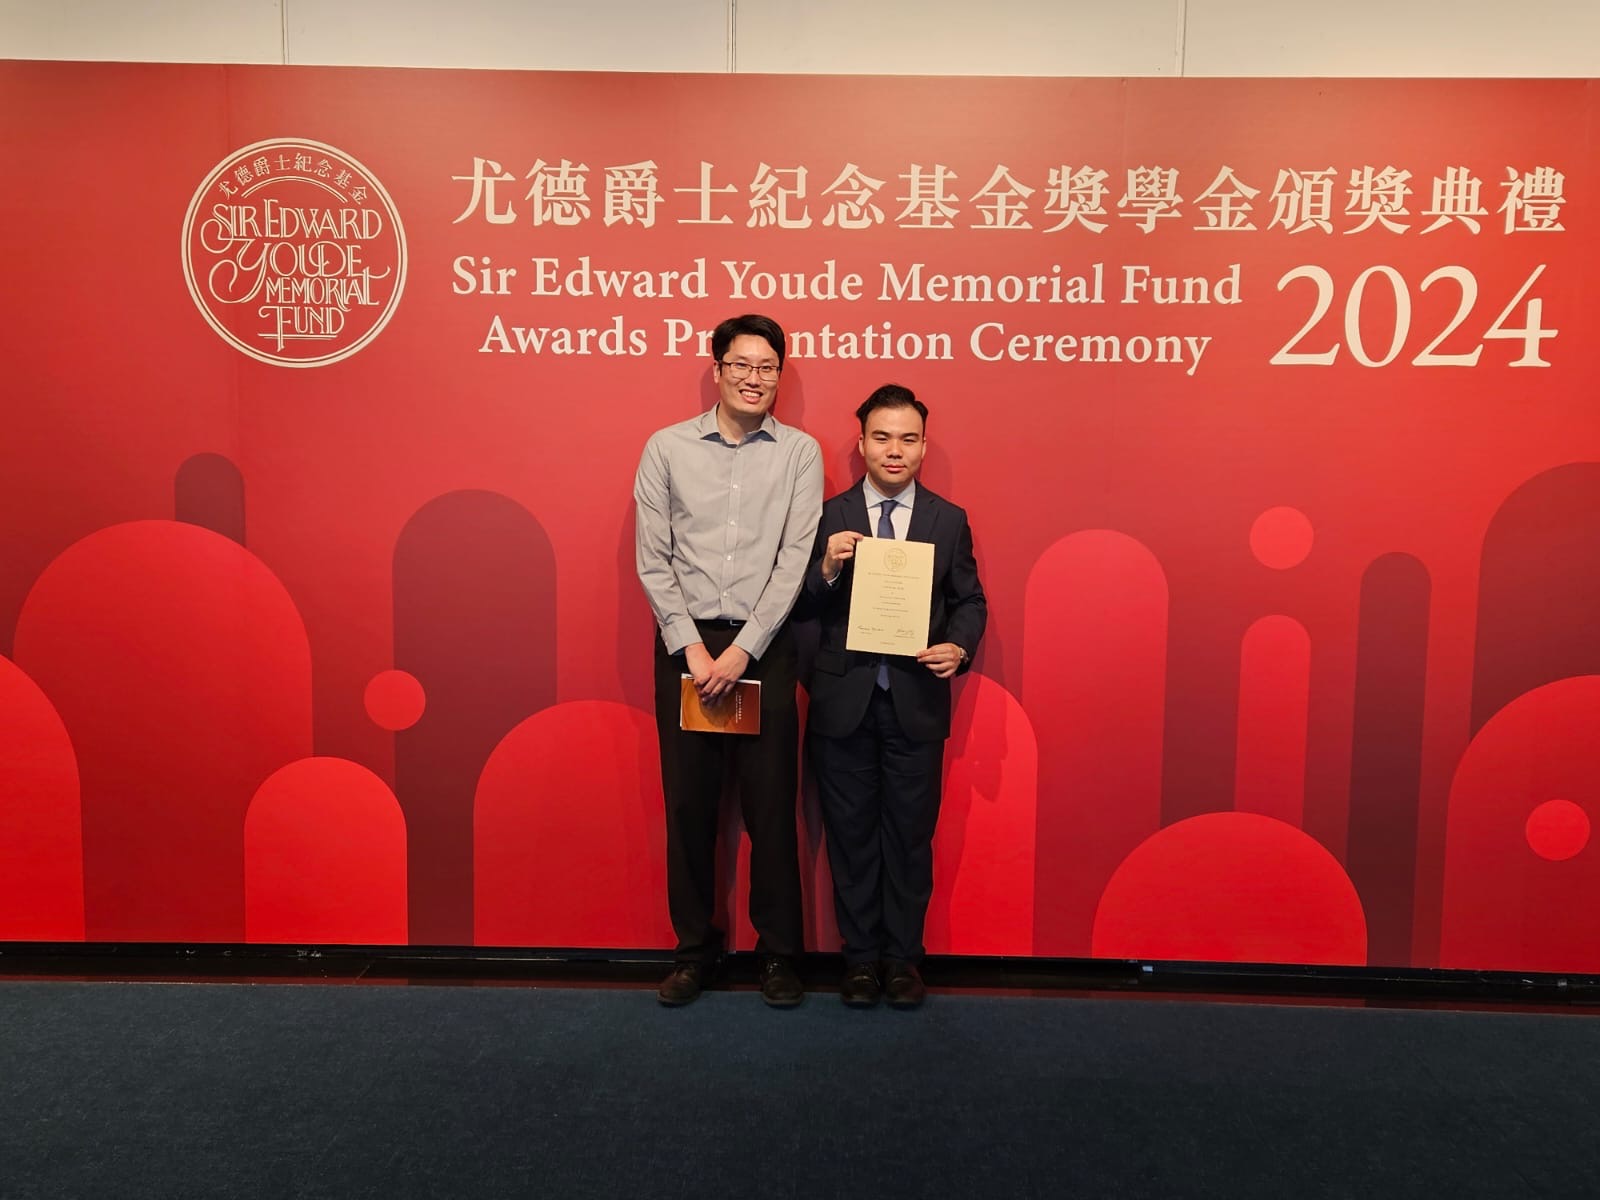 Sir Edward Youde Memorial Fund Awards Presentation Ceremony